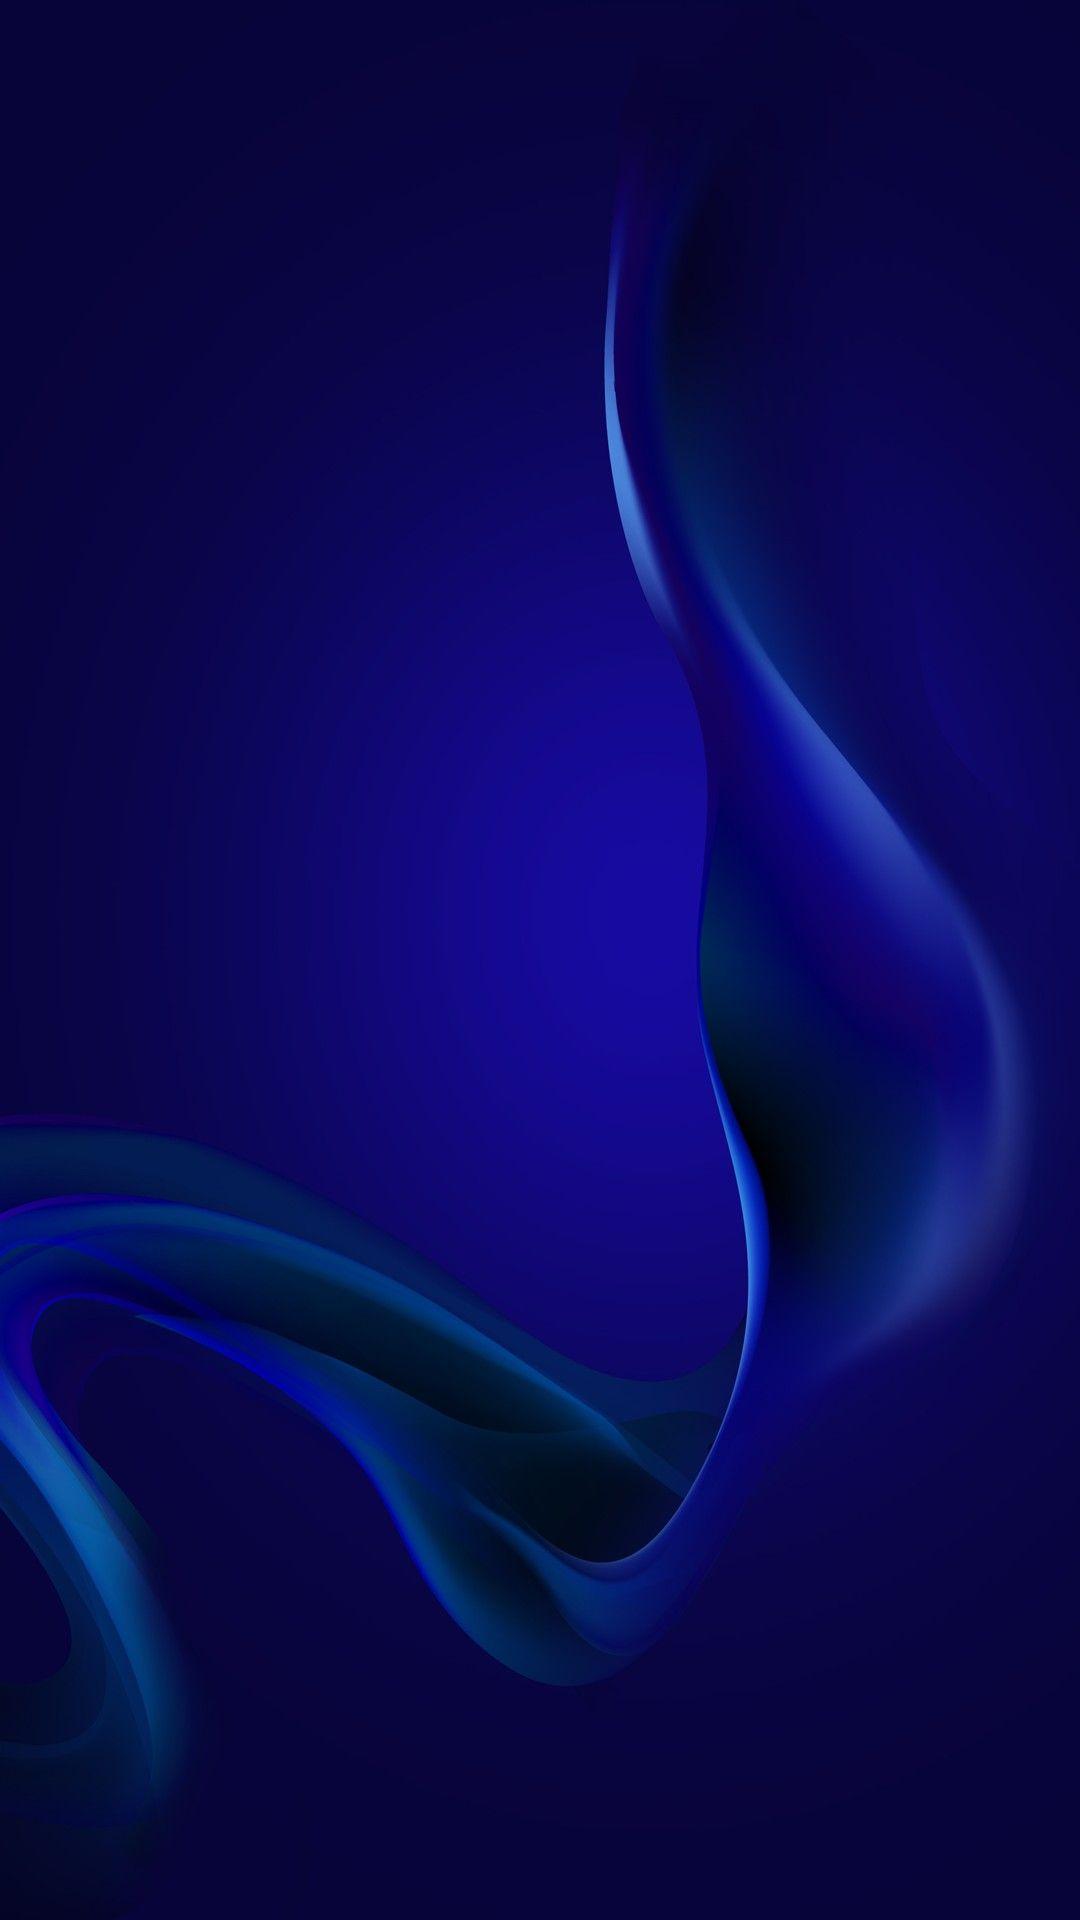 ☮ * ° ♥ ˚ℒℴѵℯ cjf. HD phone wallpaper, Blue wallpaper